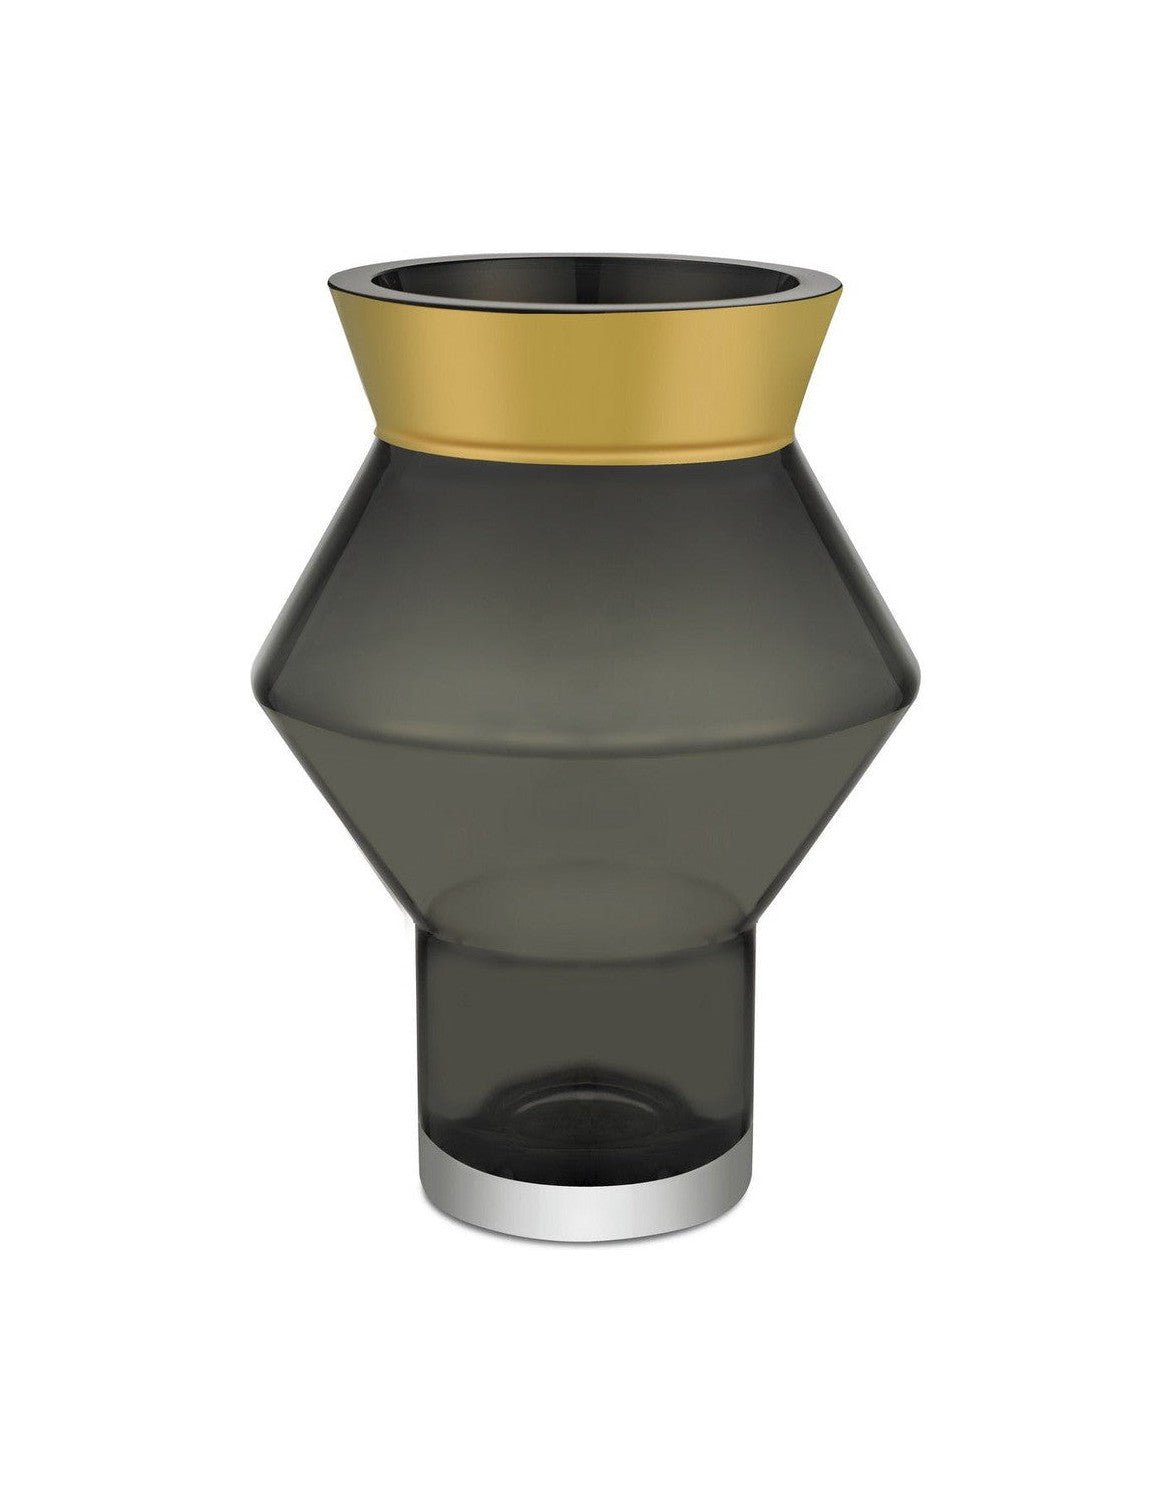 classy glass vase with 24k gold edge, CUZCO